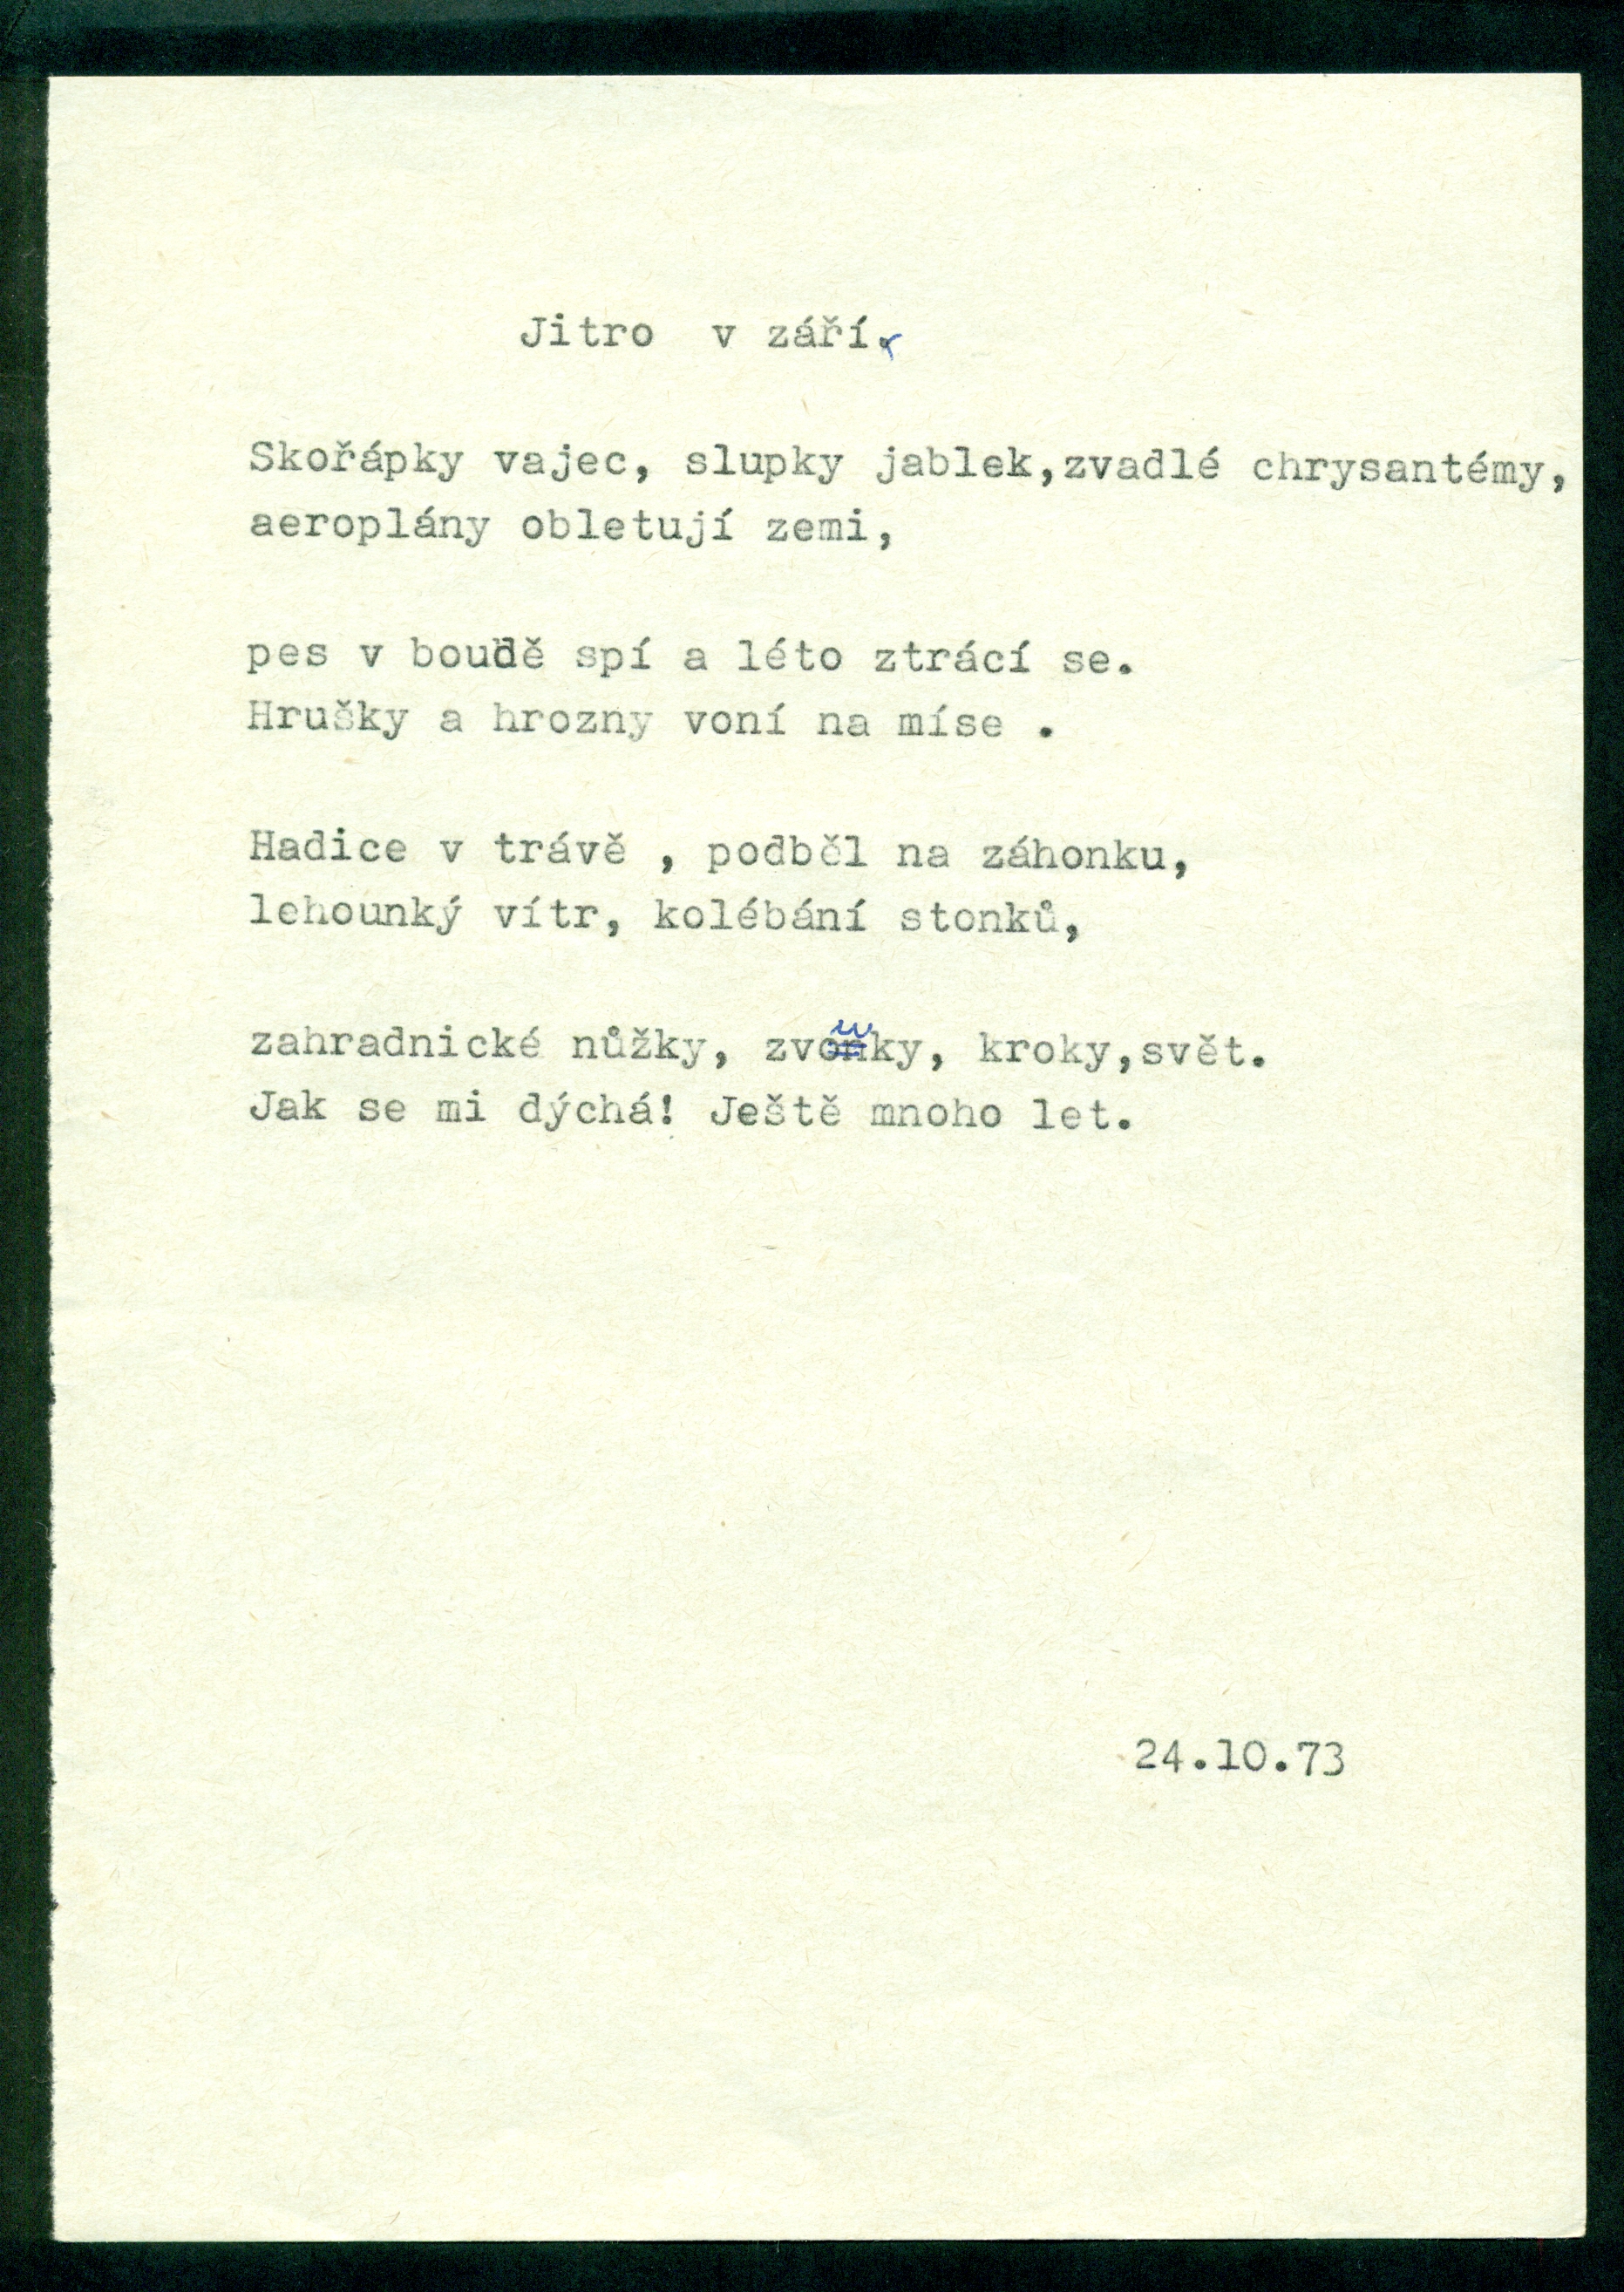 Blatný, Ivan. Old Addresses, 1979